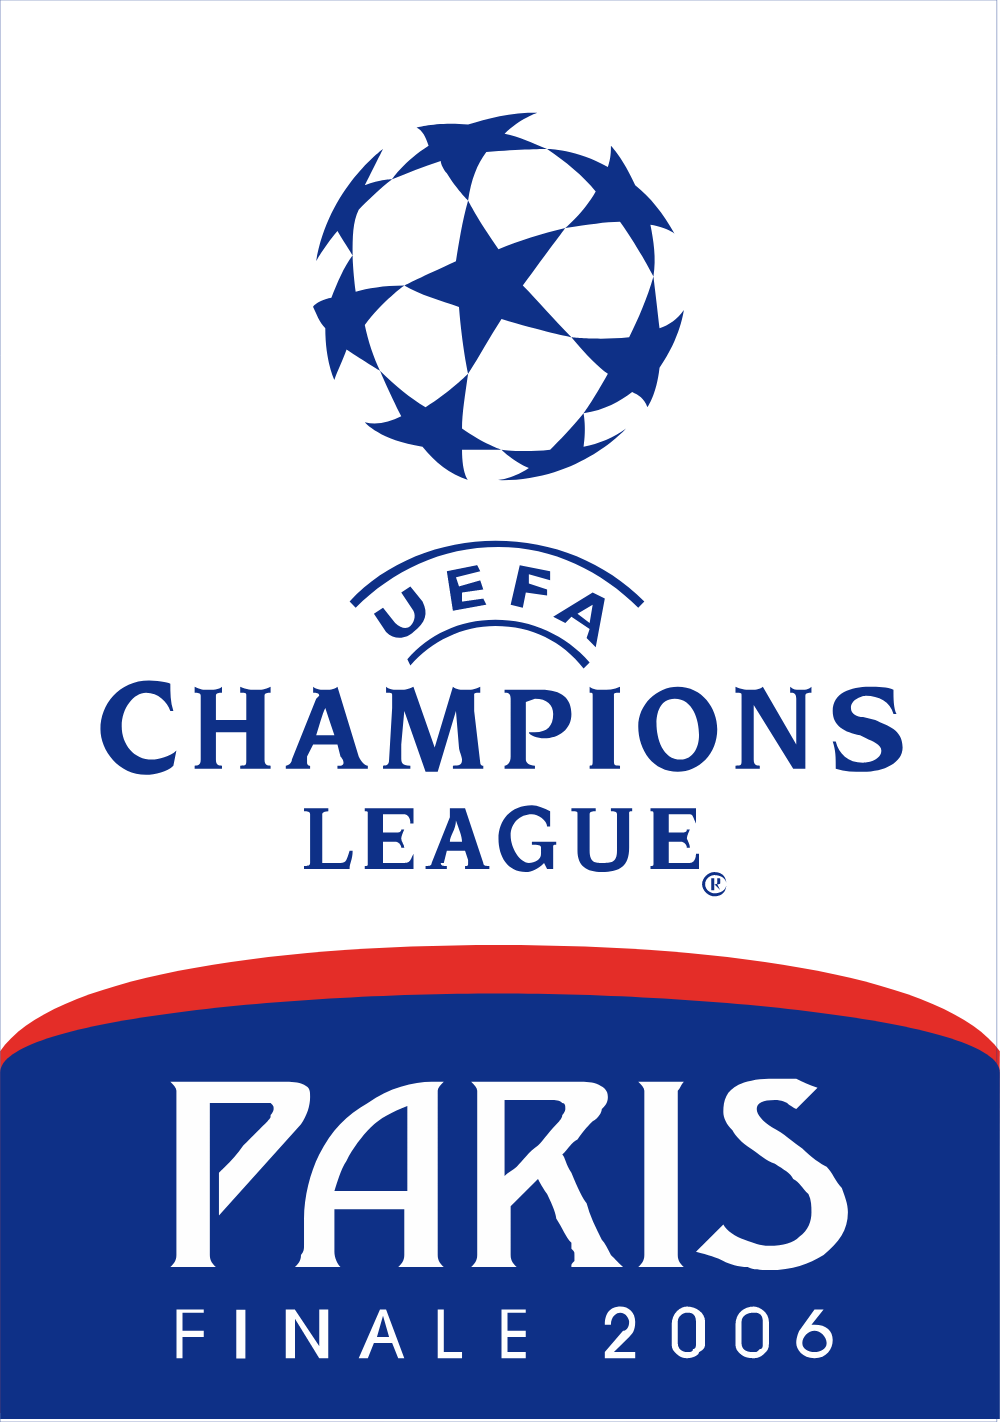 UEFA Champions League - Paris Final 2006 Logo Logos